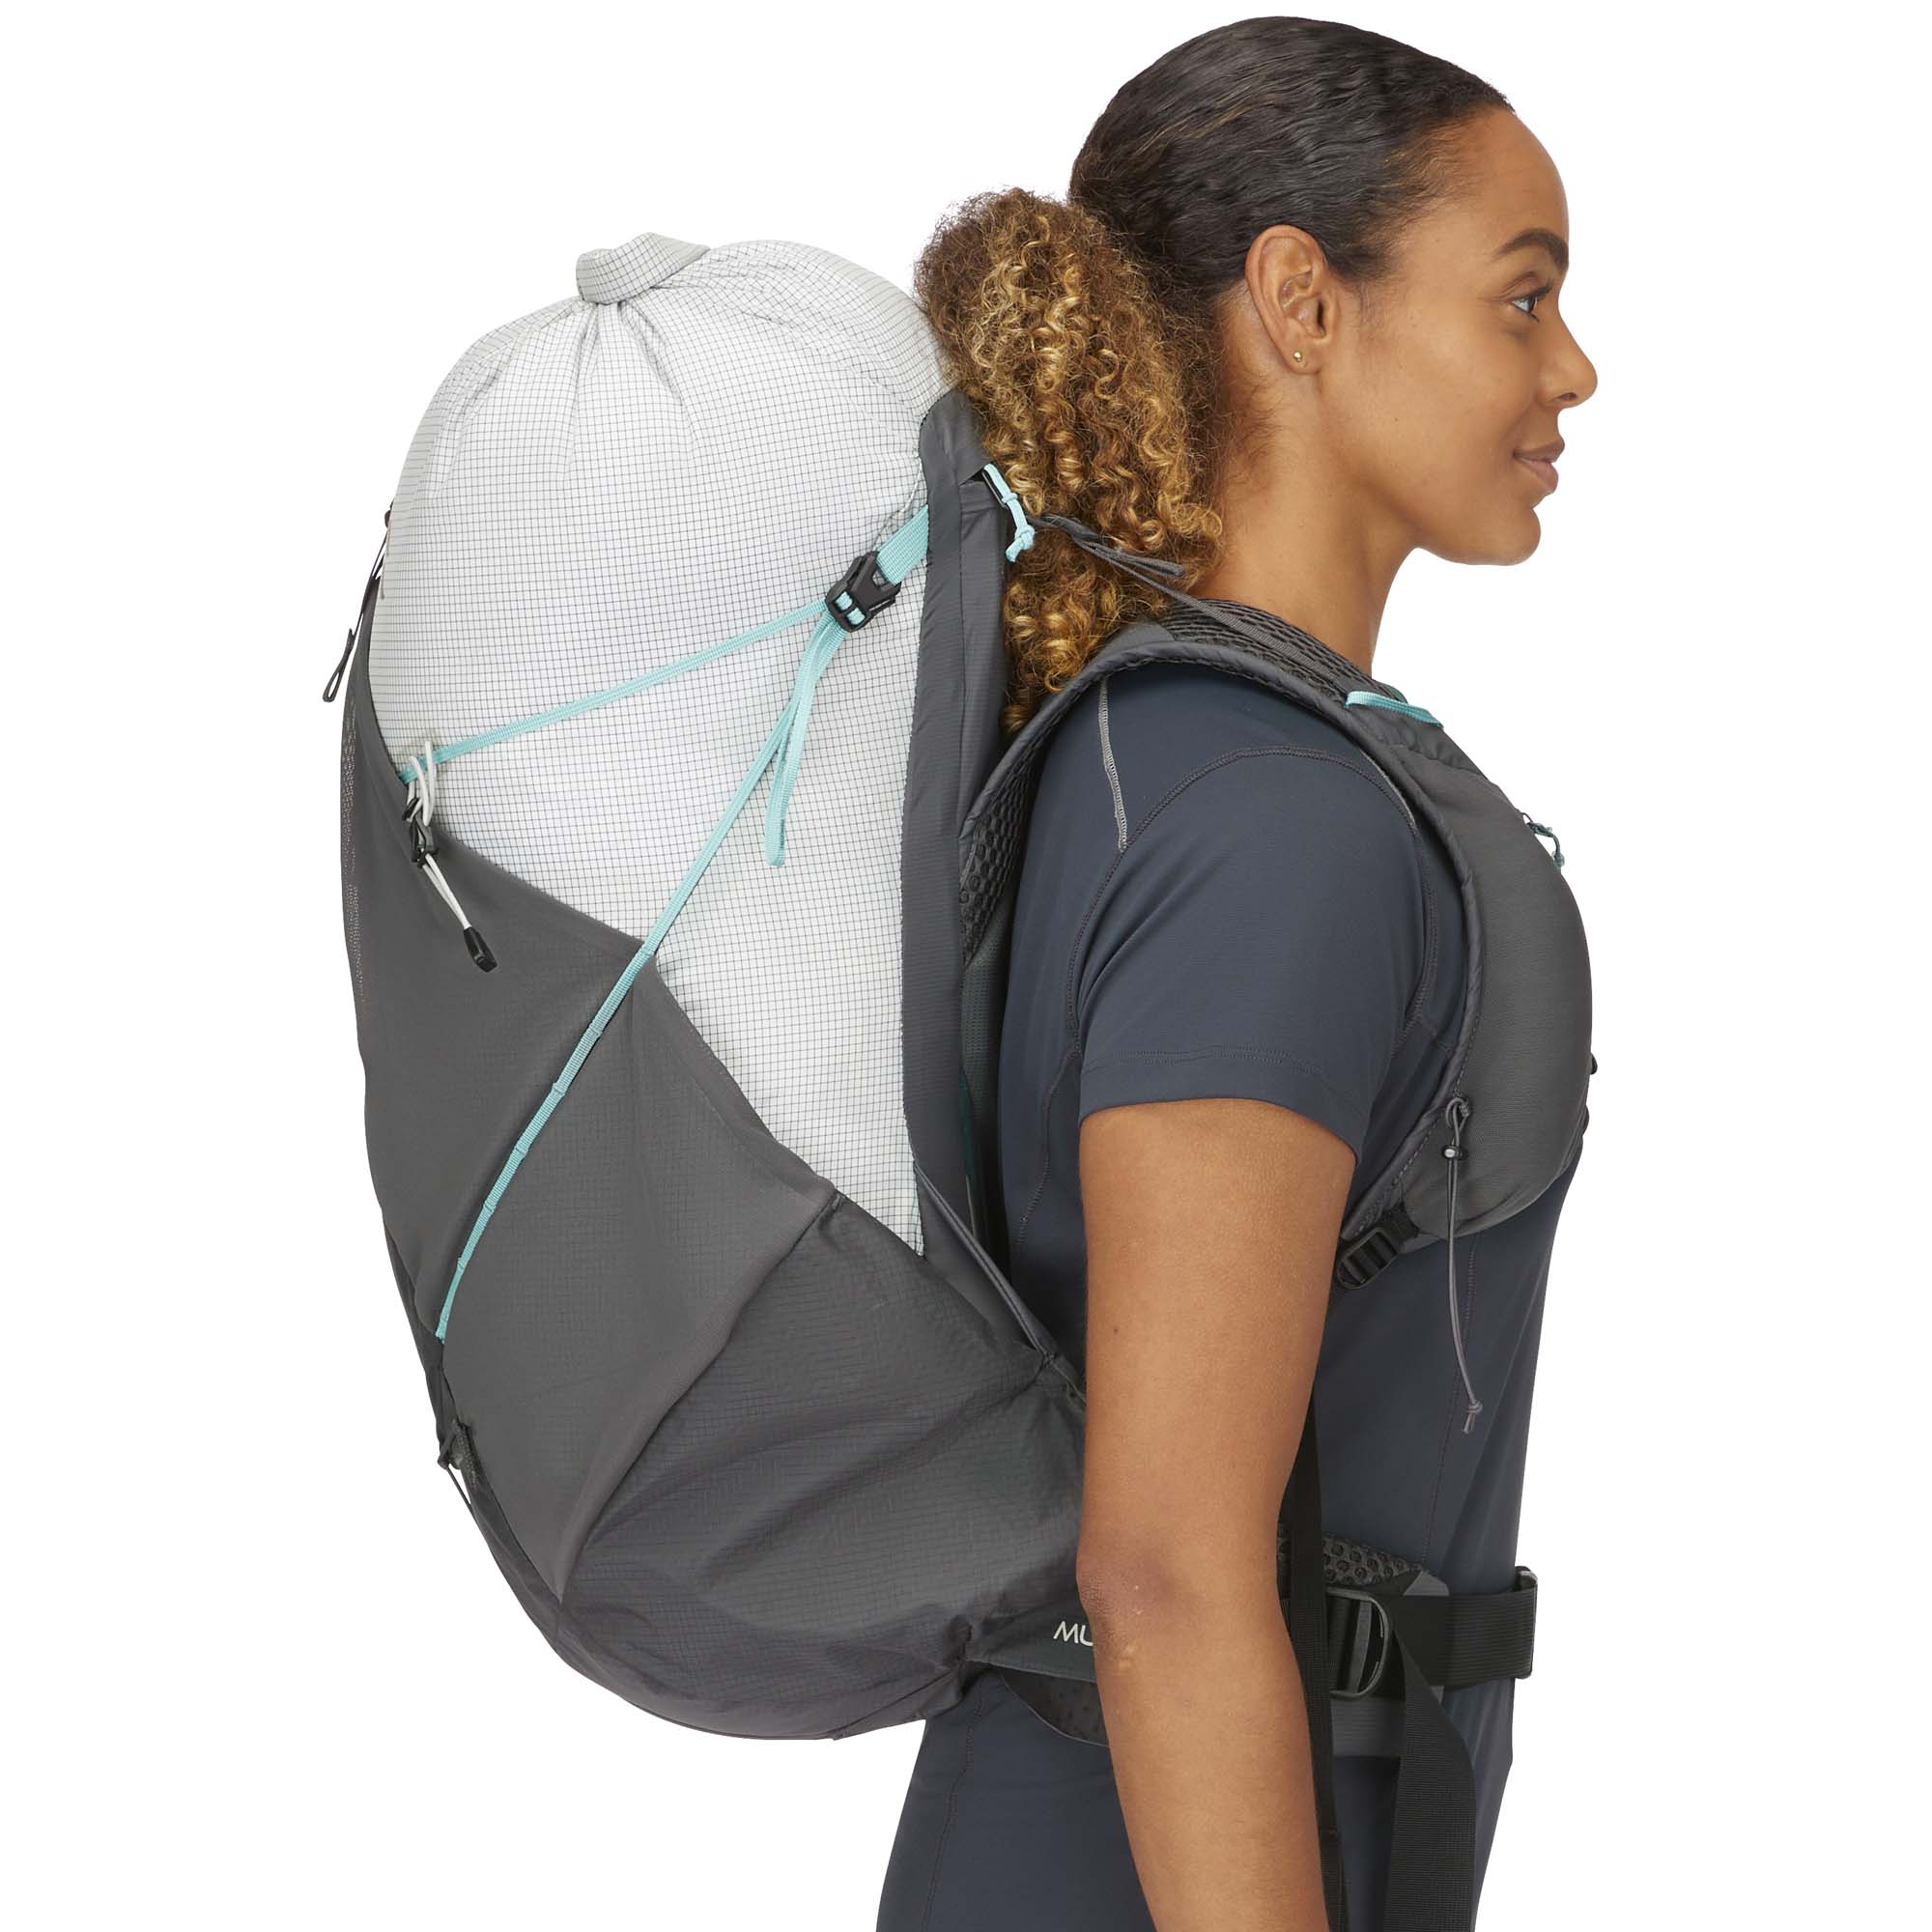 Rab Muon ND 40 Women's Technical Trekking Backpack